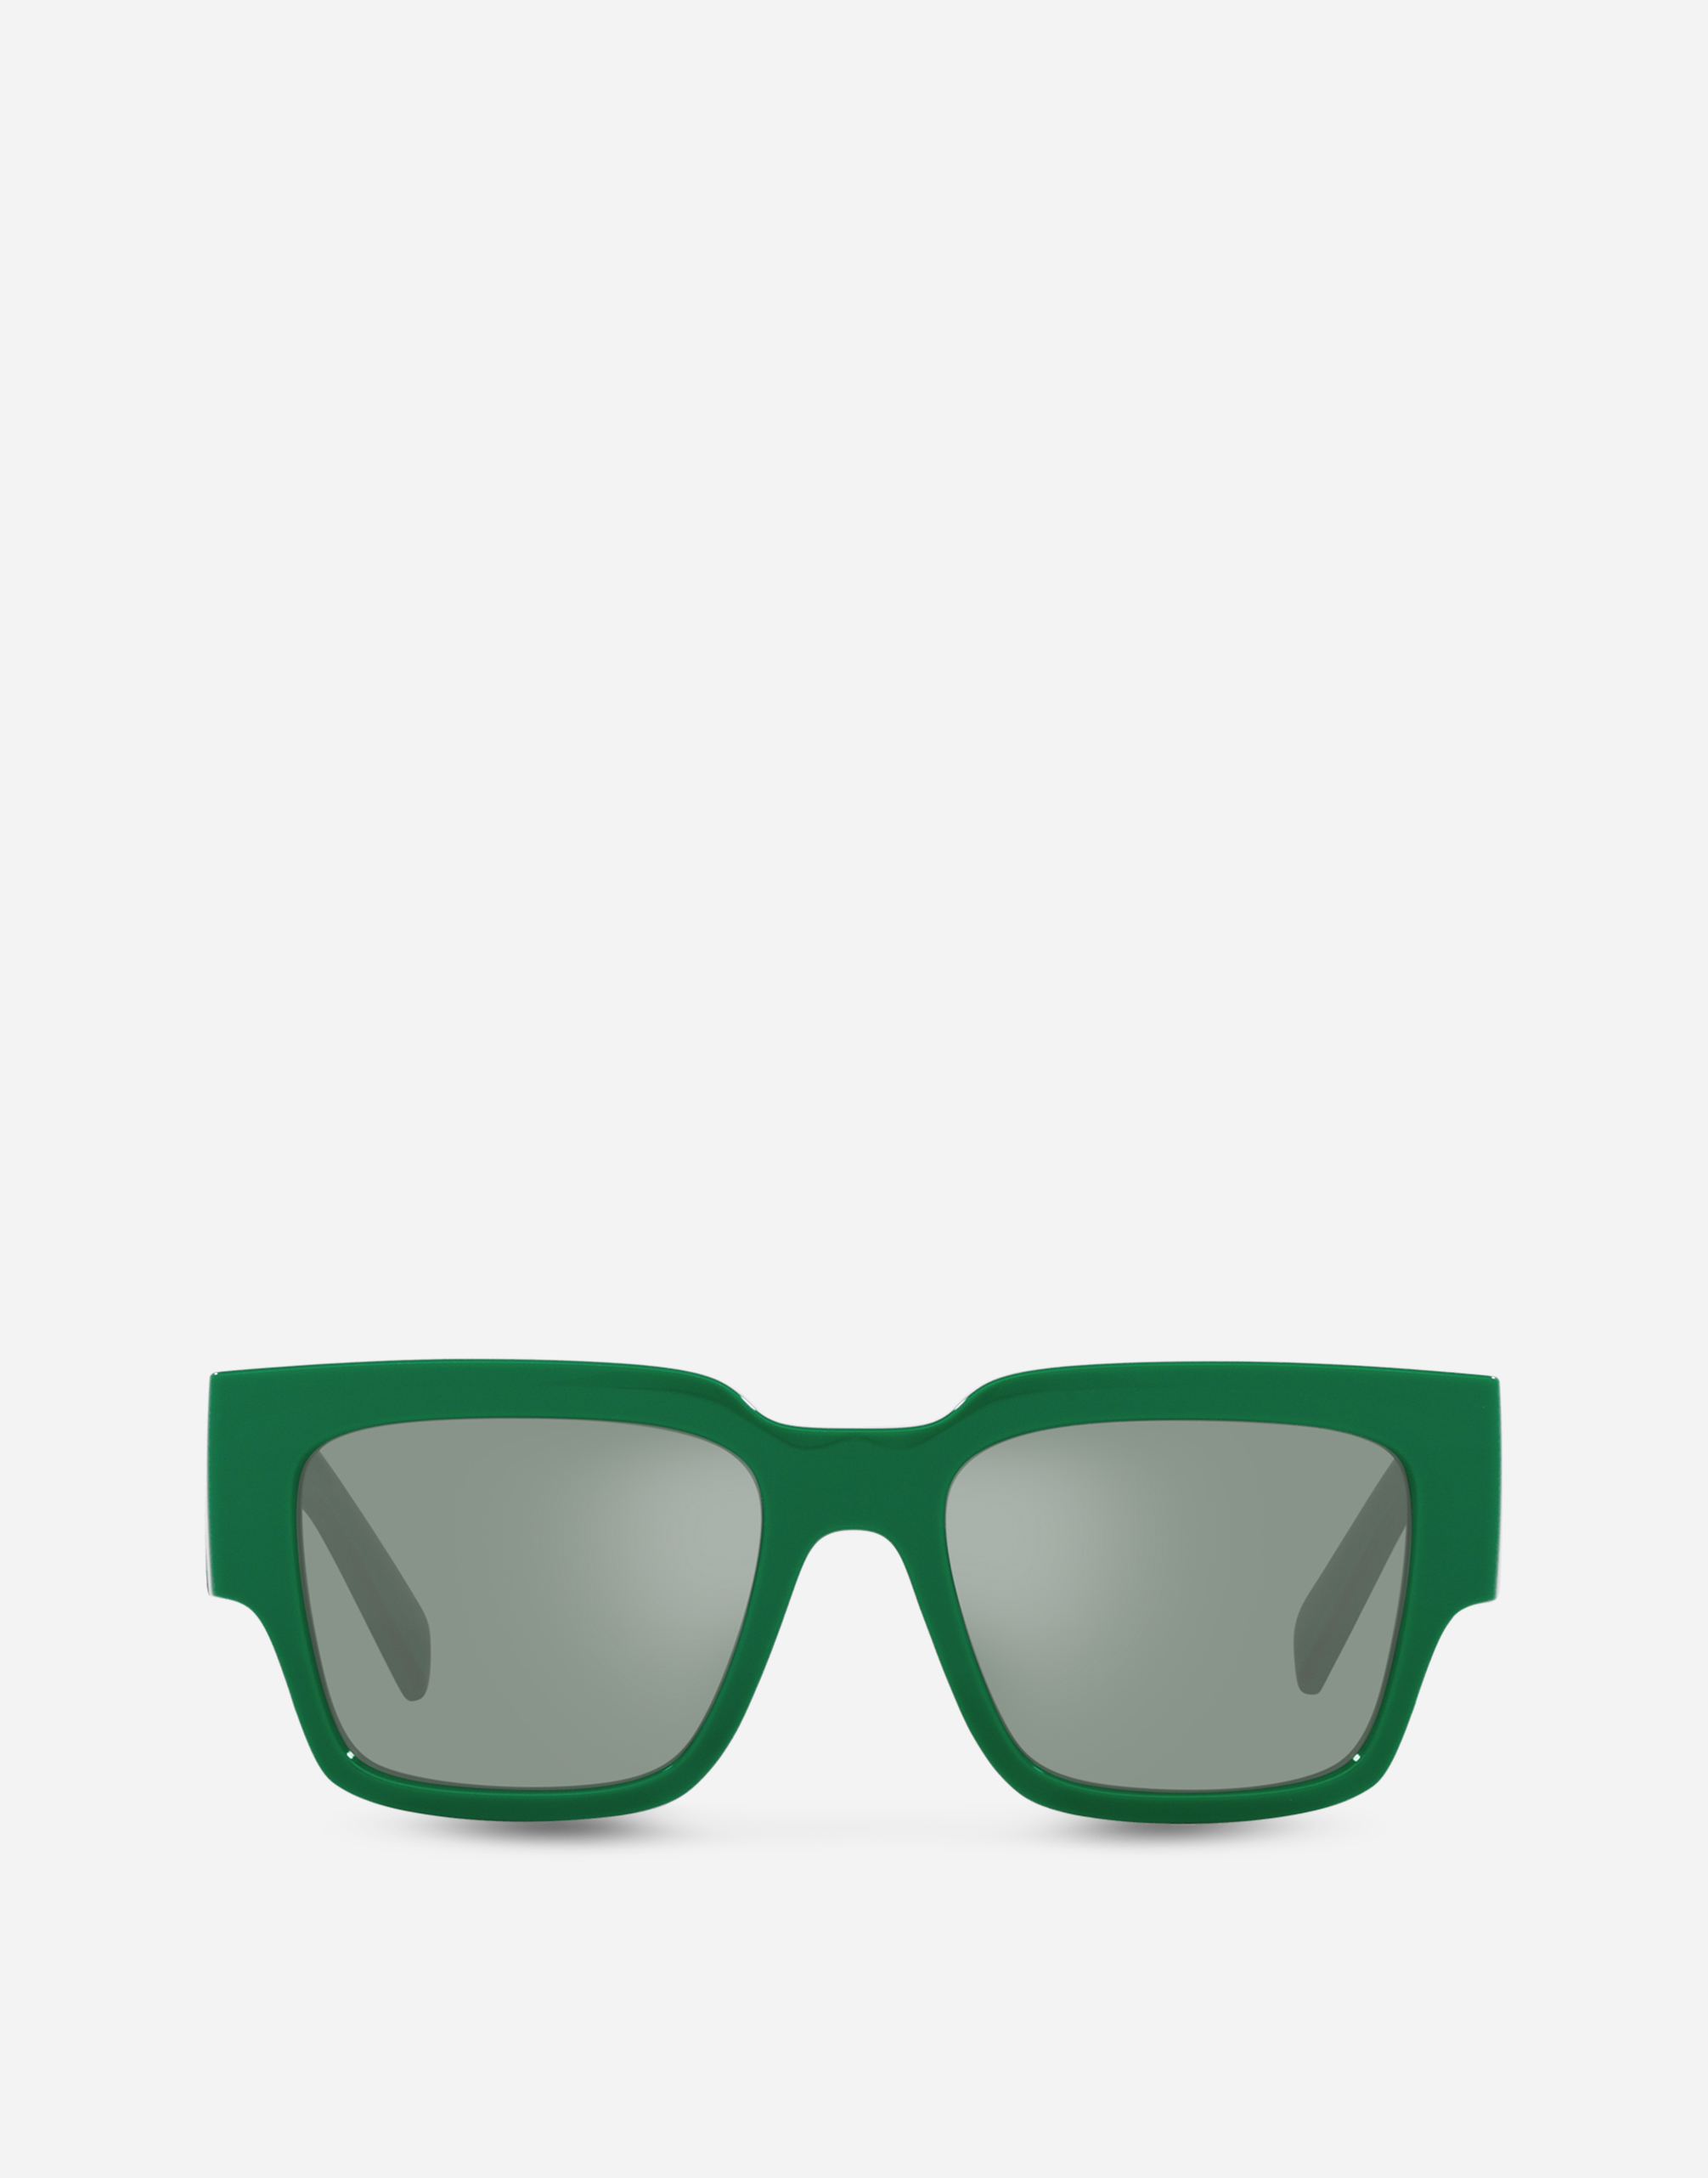 DG Elastic Sunglasses in Green